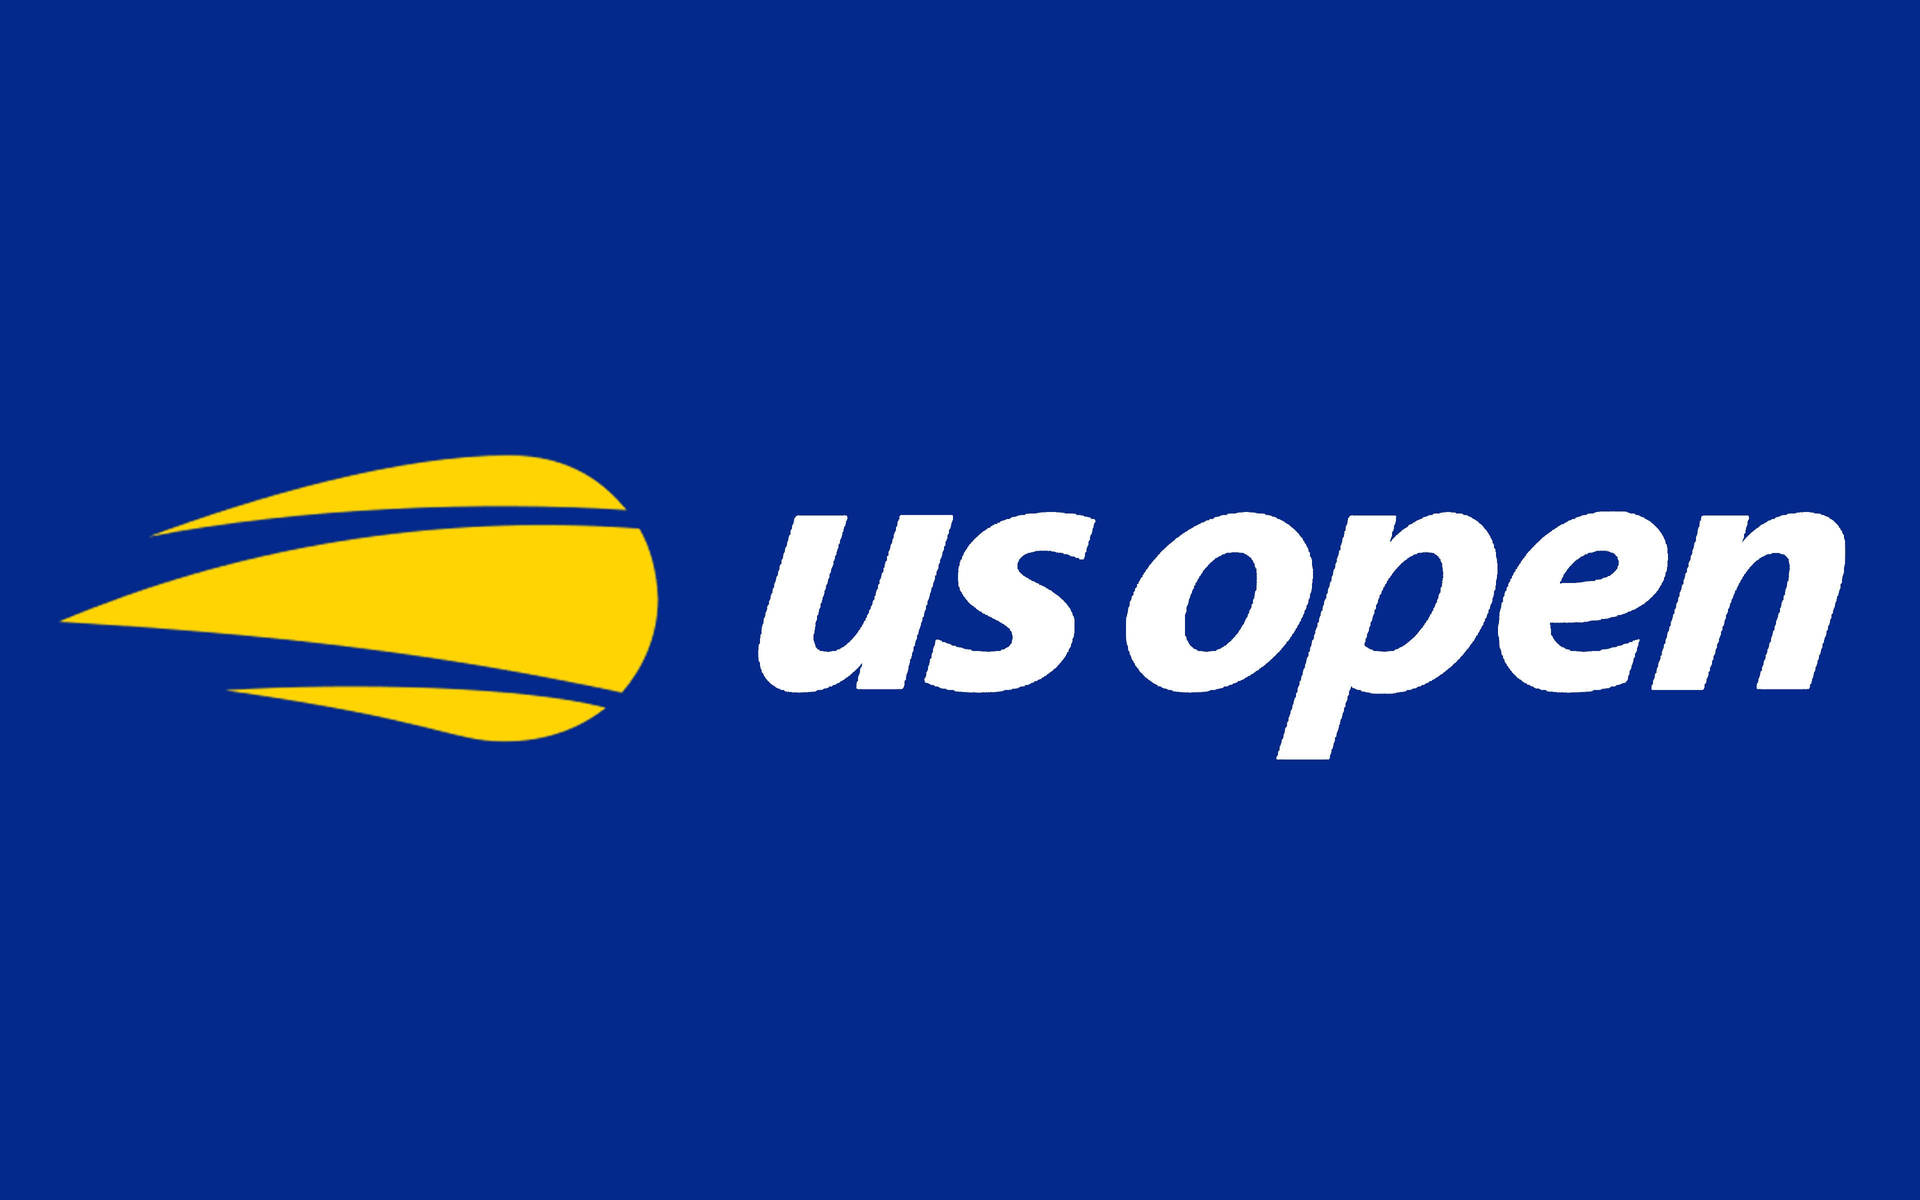 US Open Name Logo Wallpaper